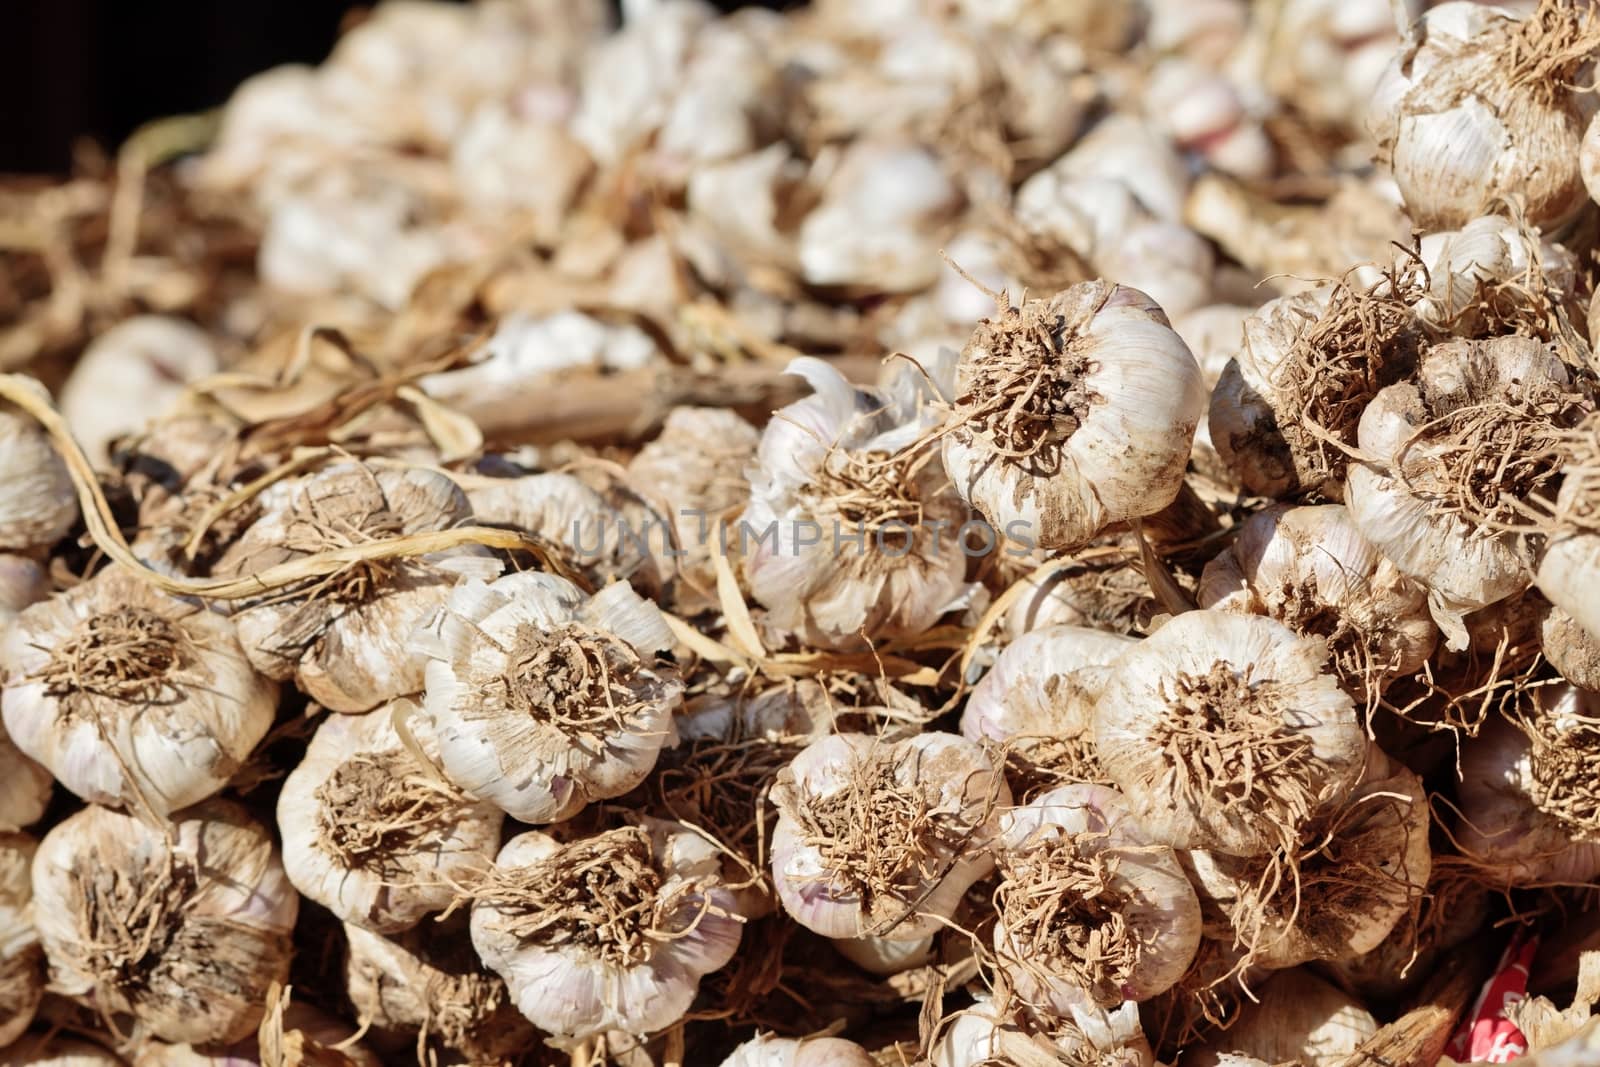 Garlic at a street market by dsmsoft